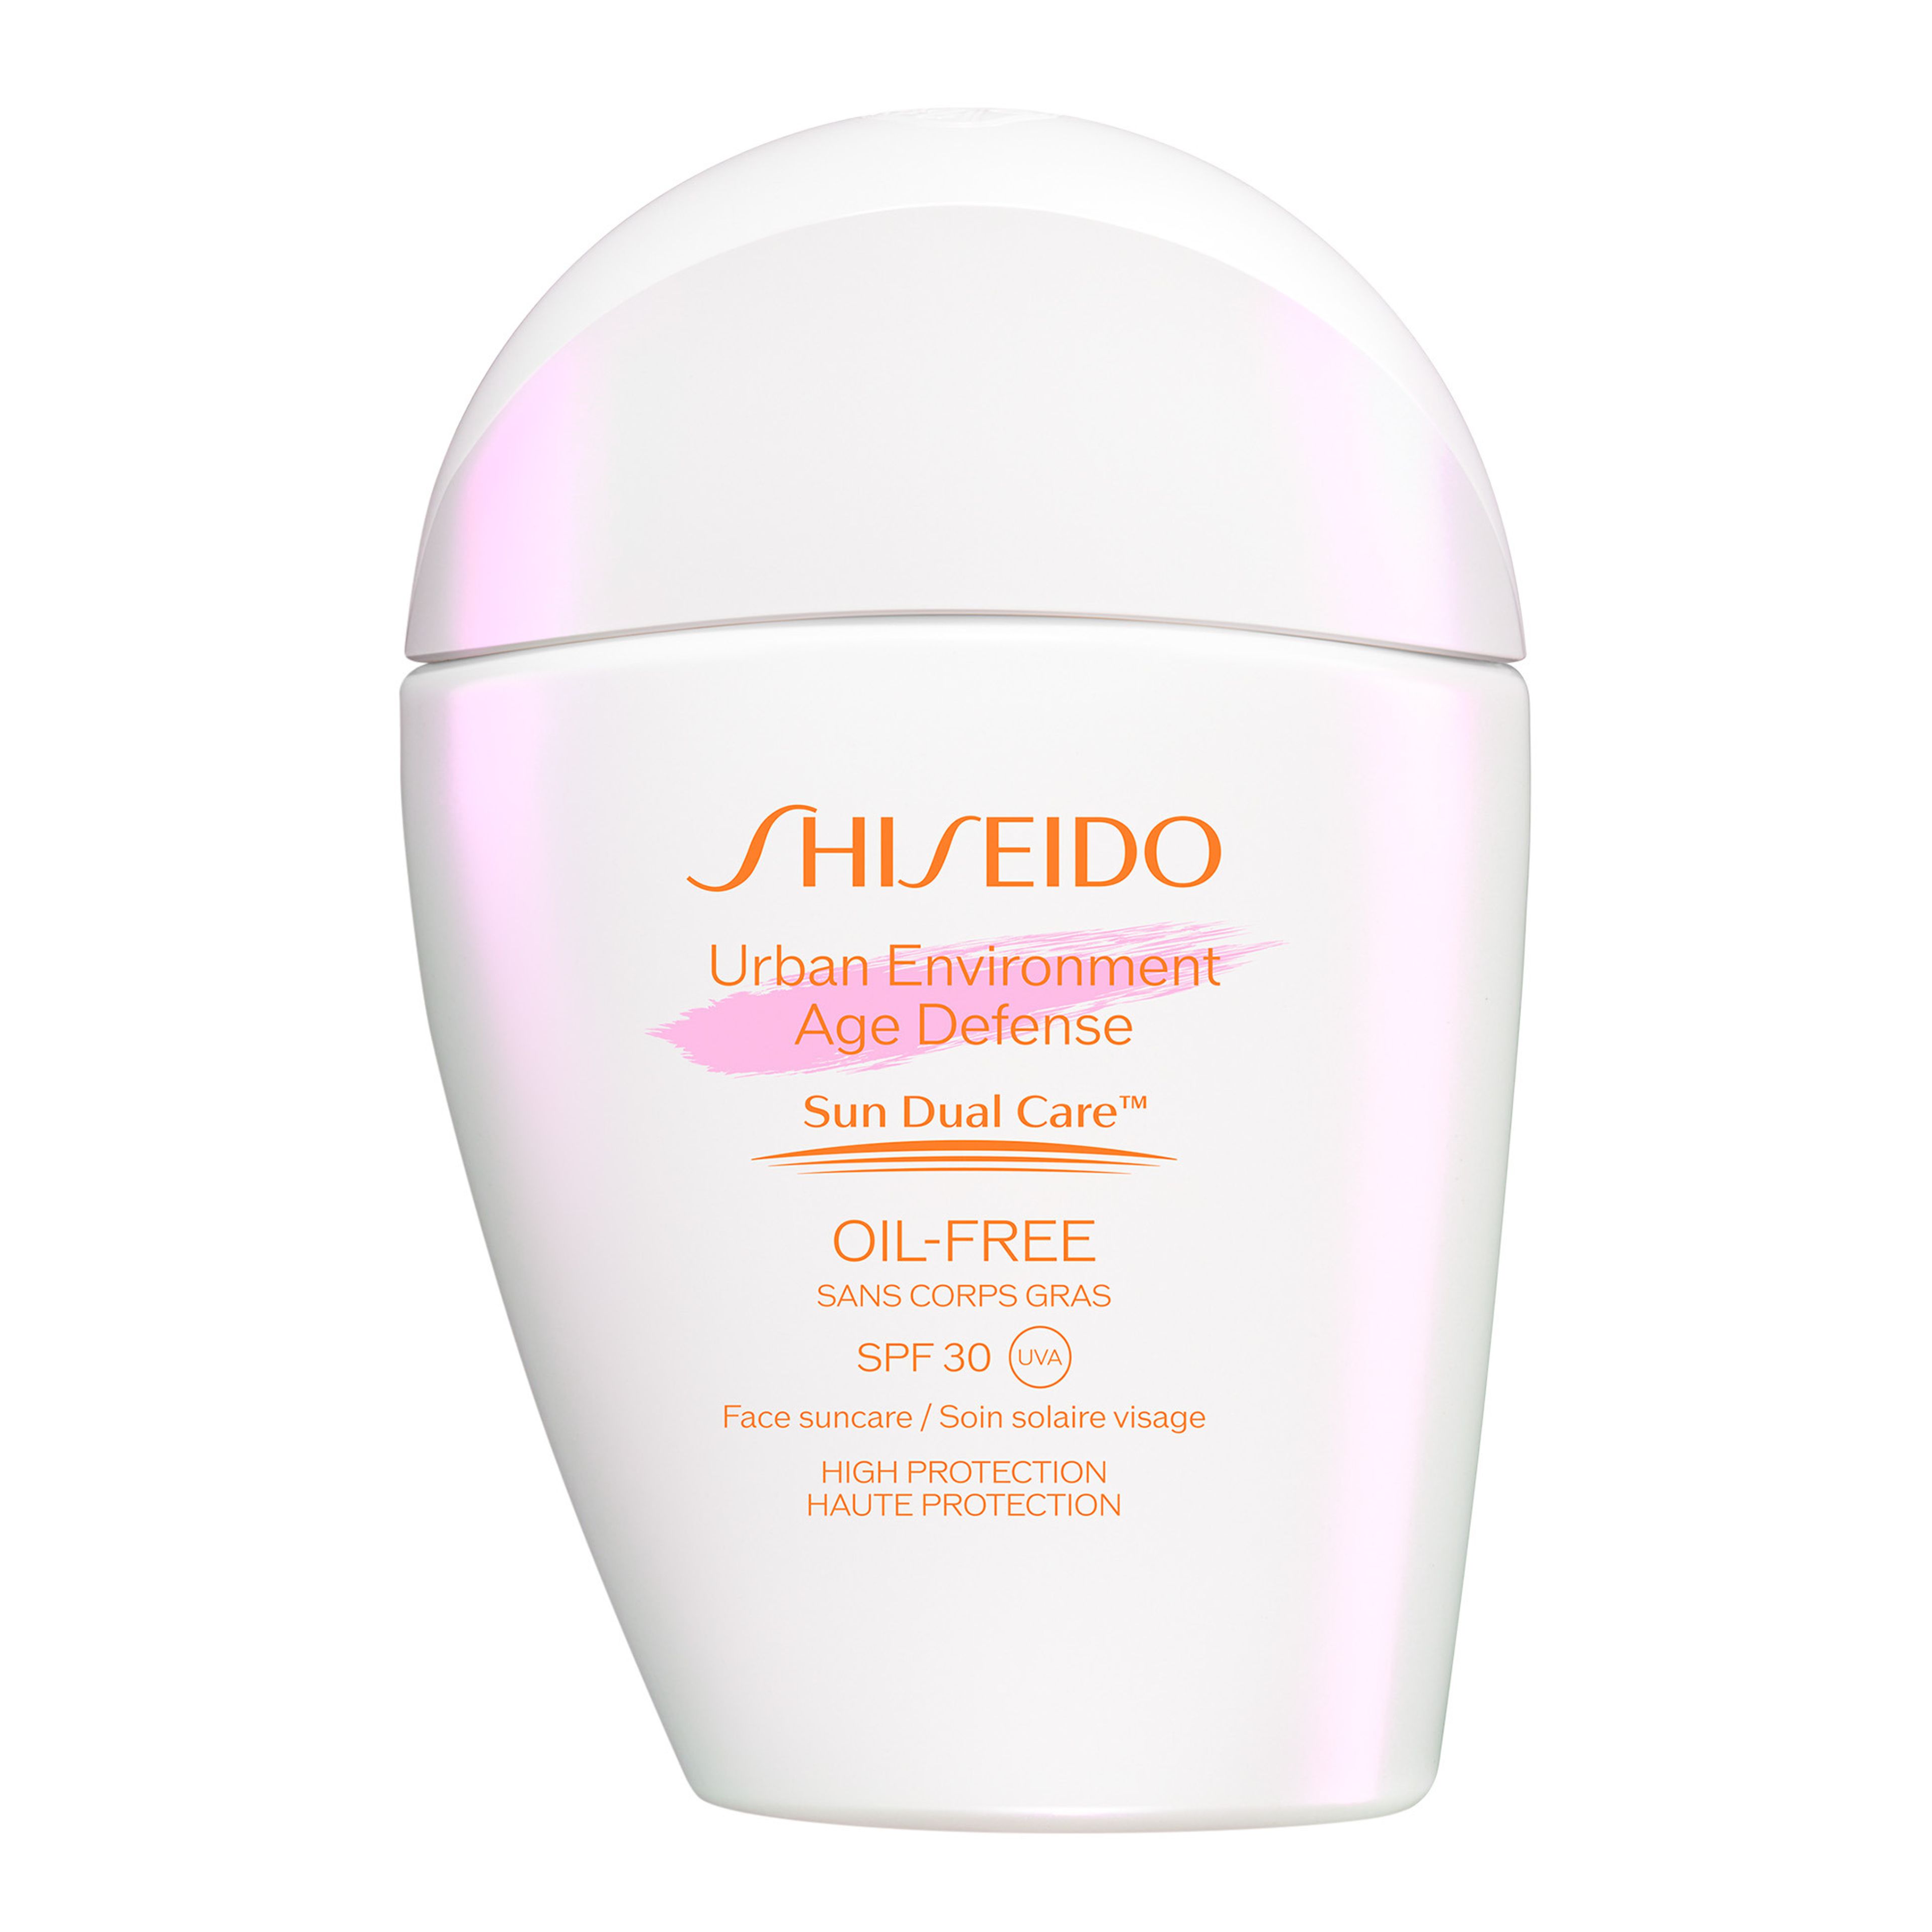 Shiseido Urban Environment Age Defense Oil-free Spf 30 1